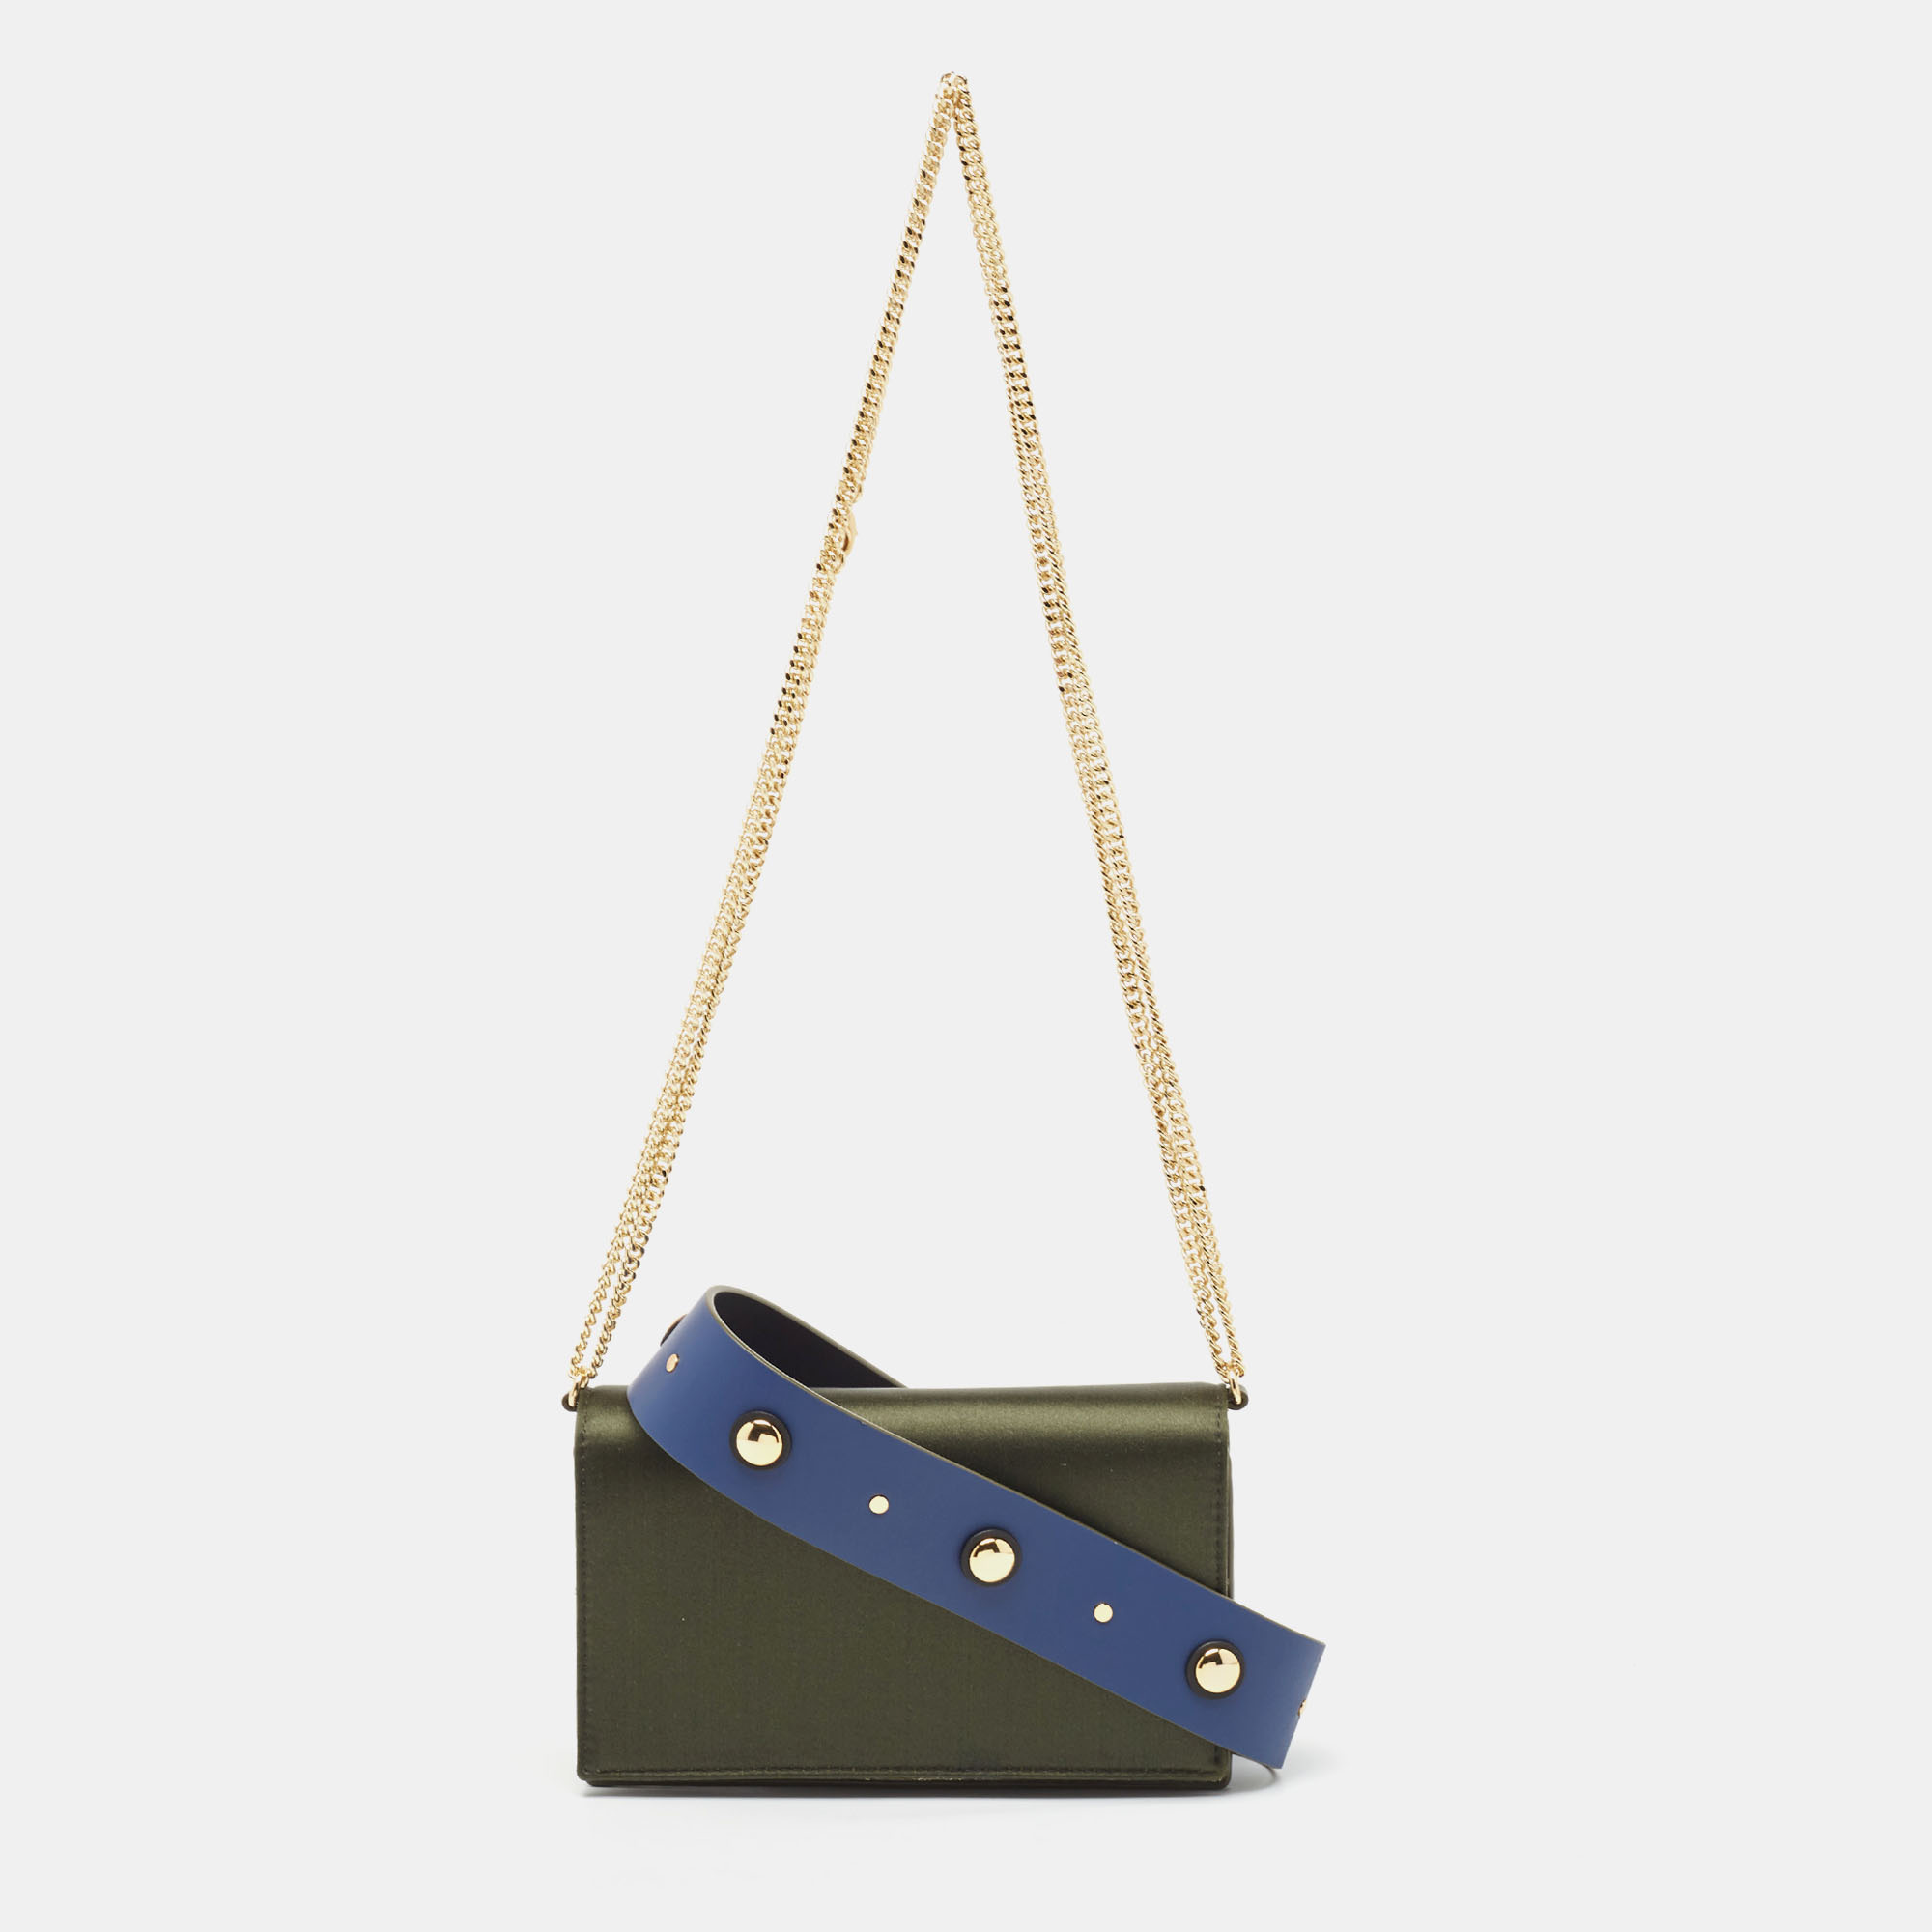 Diane von furstenberg olive green satin and leather flap chain bag